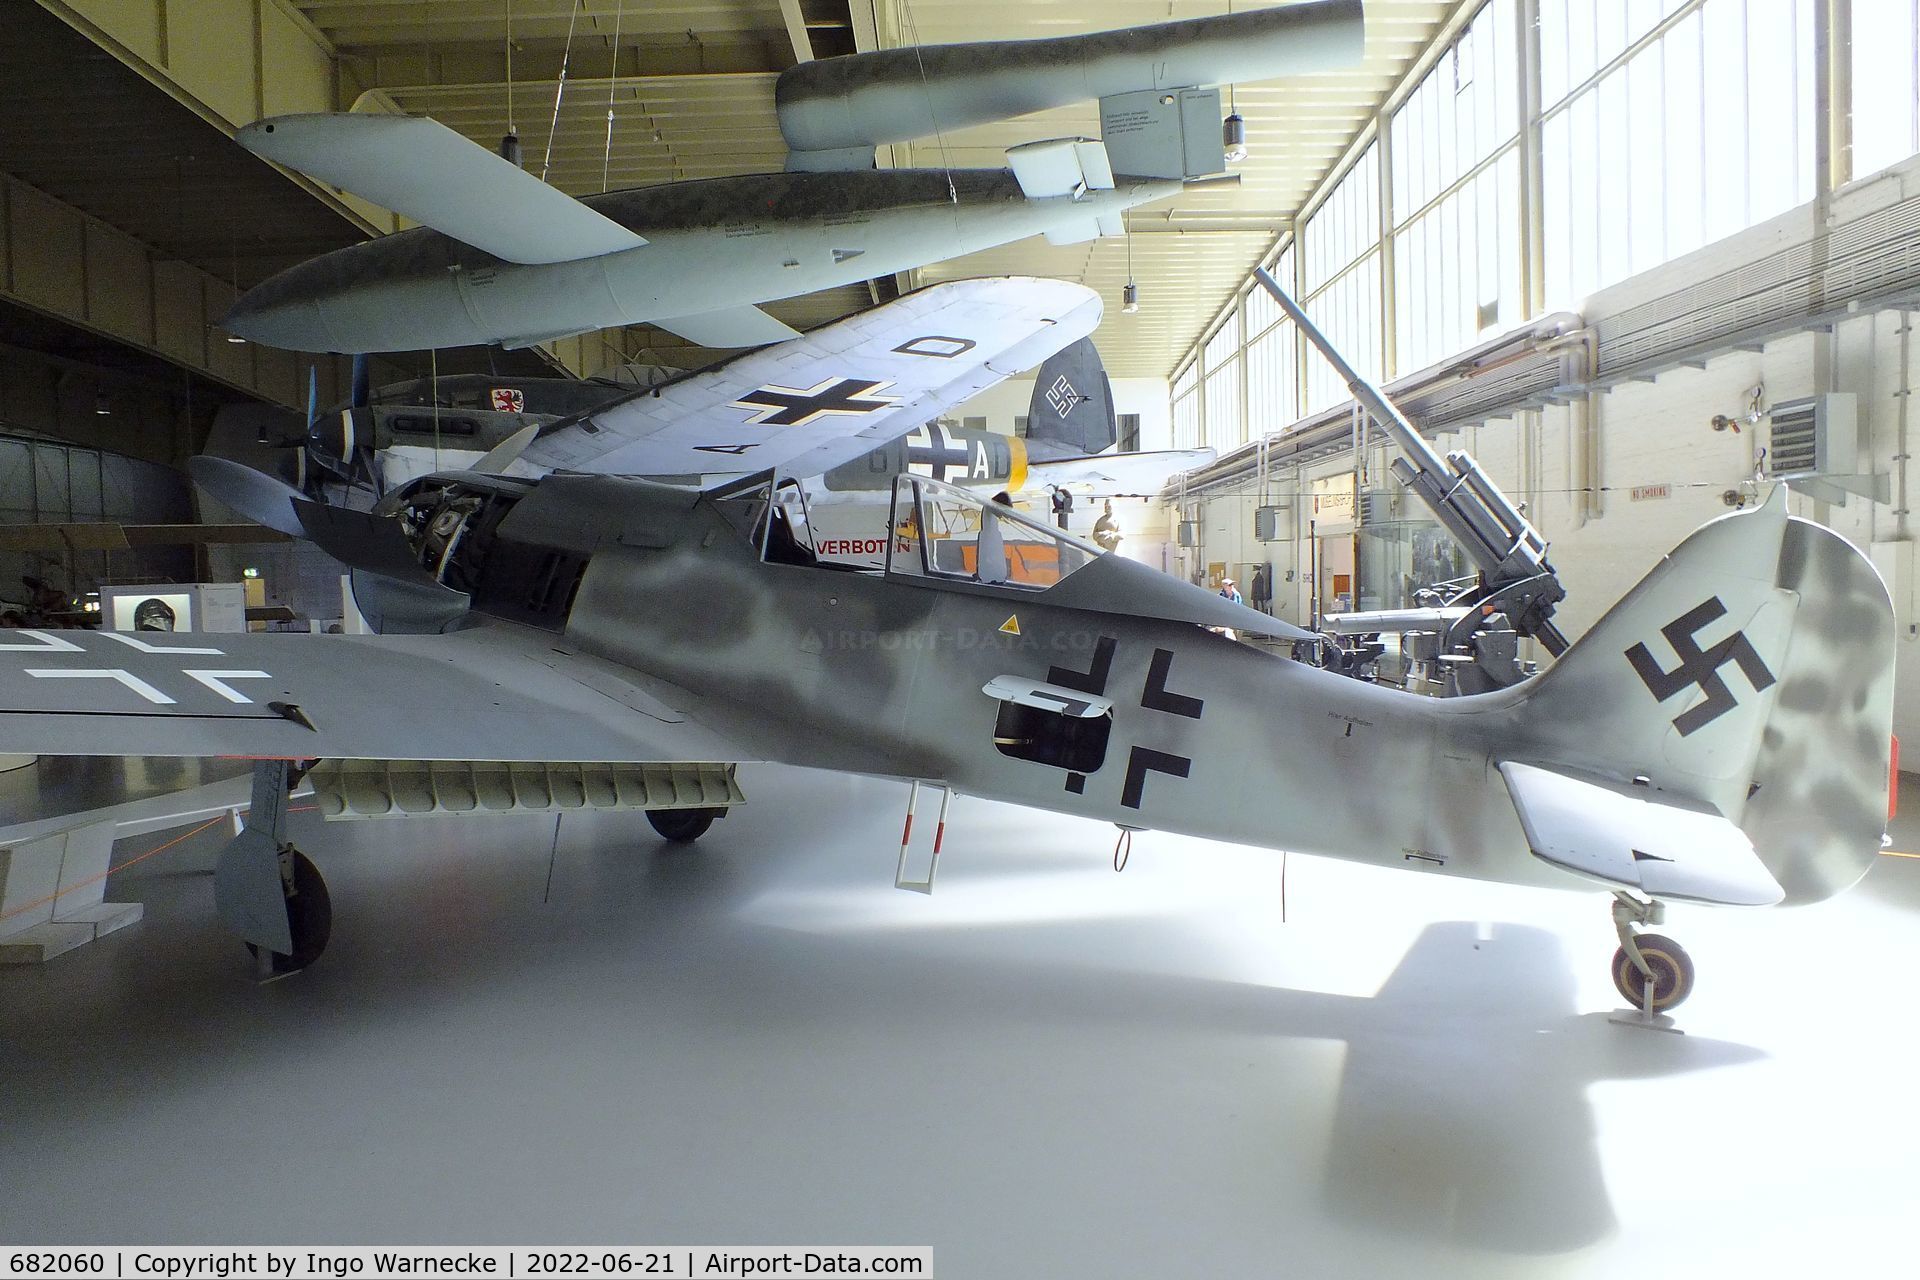 682060, Focke-Wulf Fw-190A-8 C/N 682060, Focke-Wulf Fw 190A-8 at the MHM Berlin-Gatow (aka Luftwaffenmuseum, German Air Force Museum)